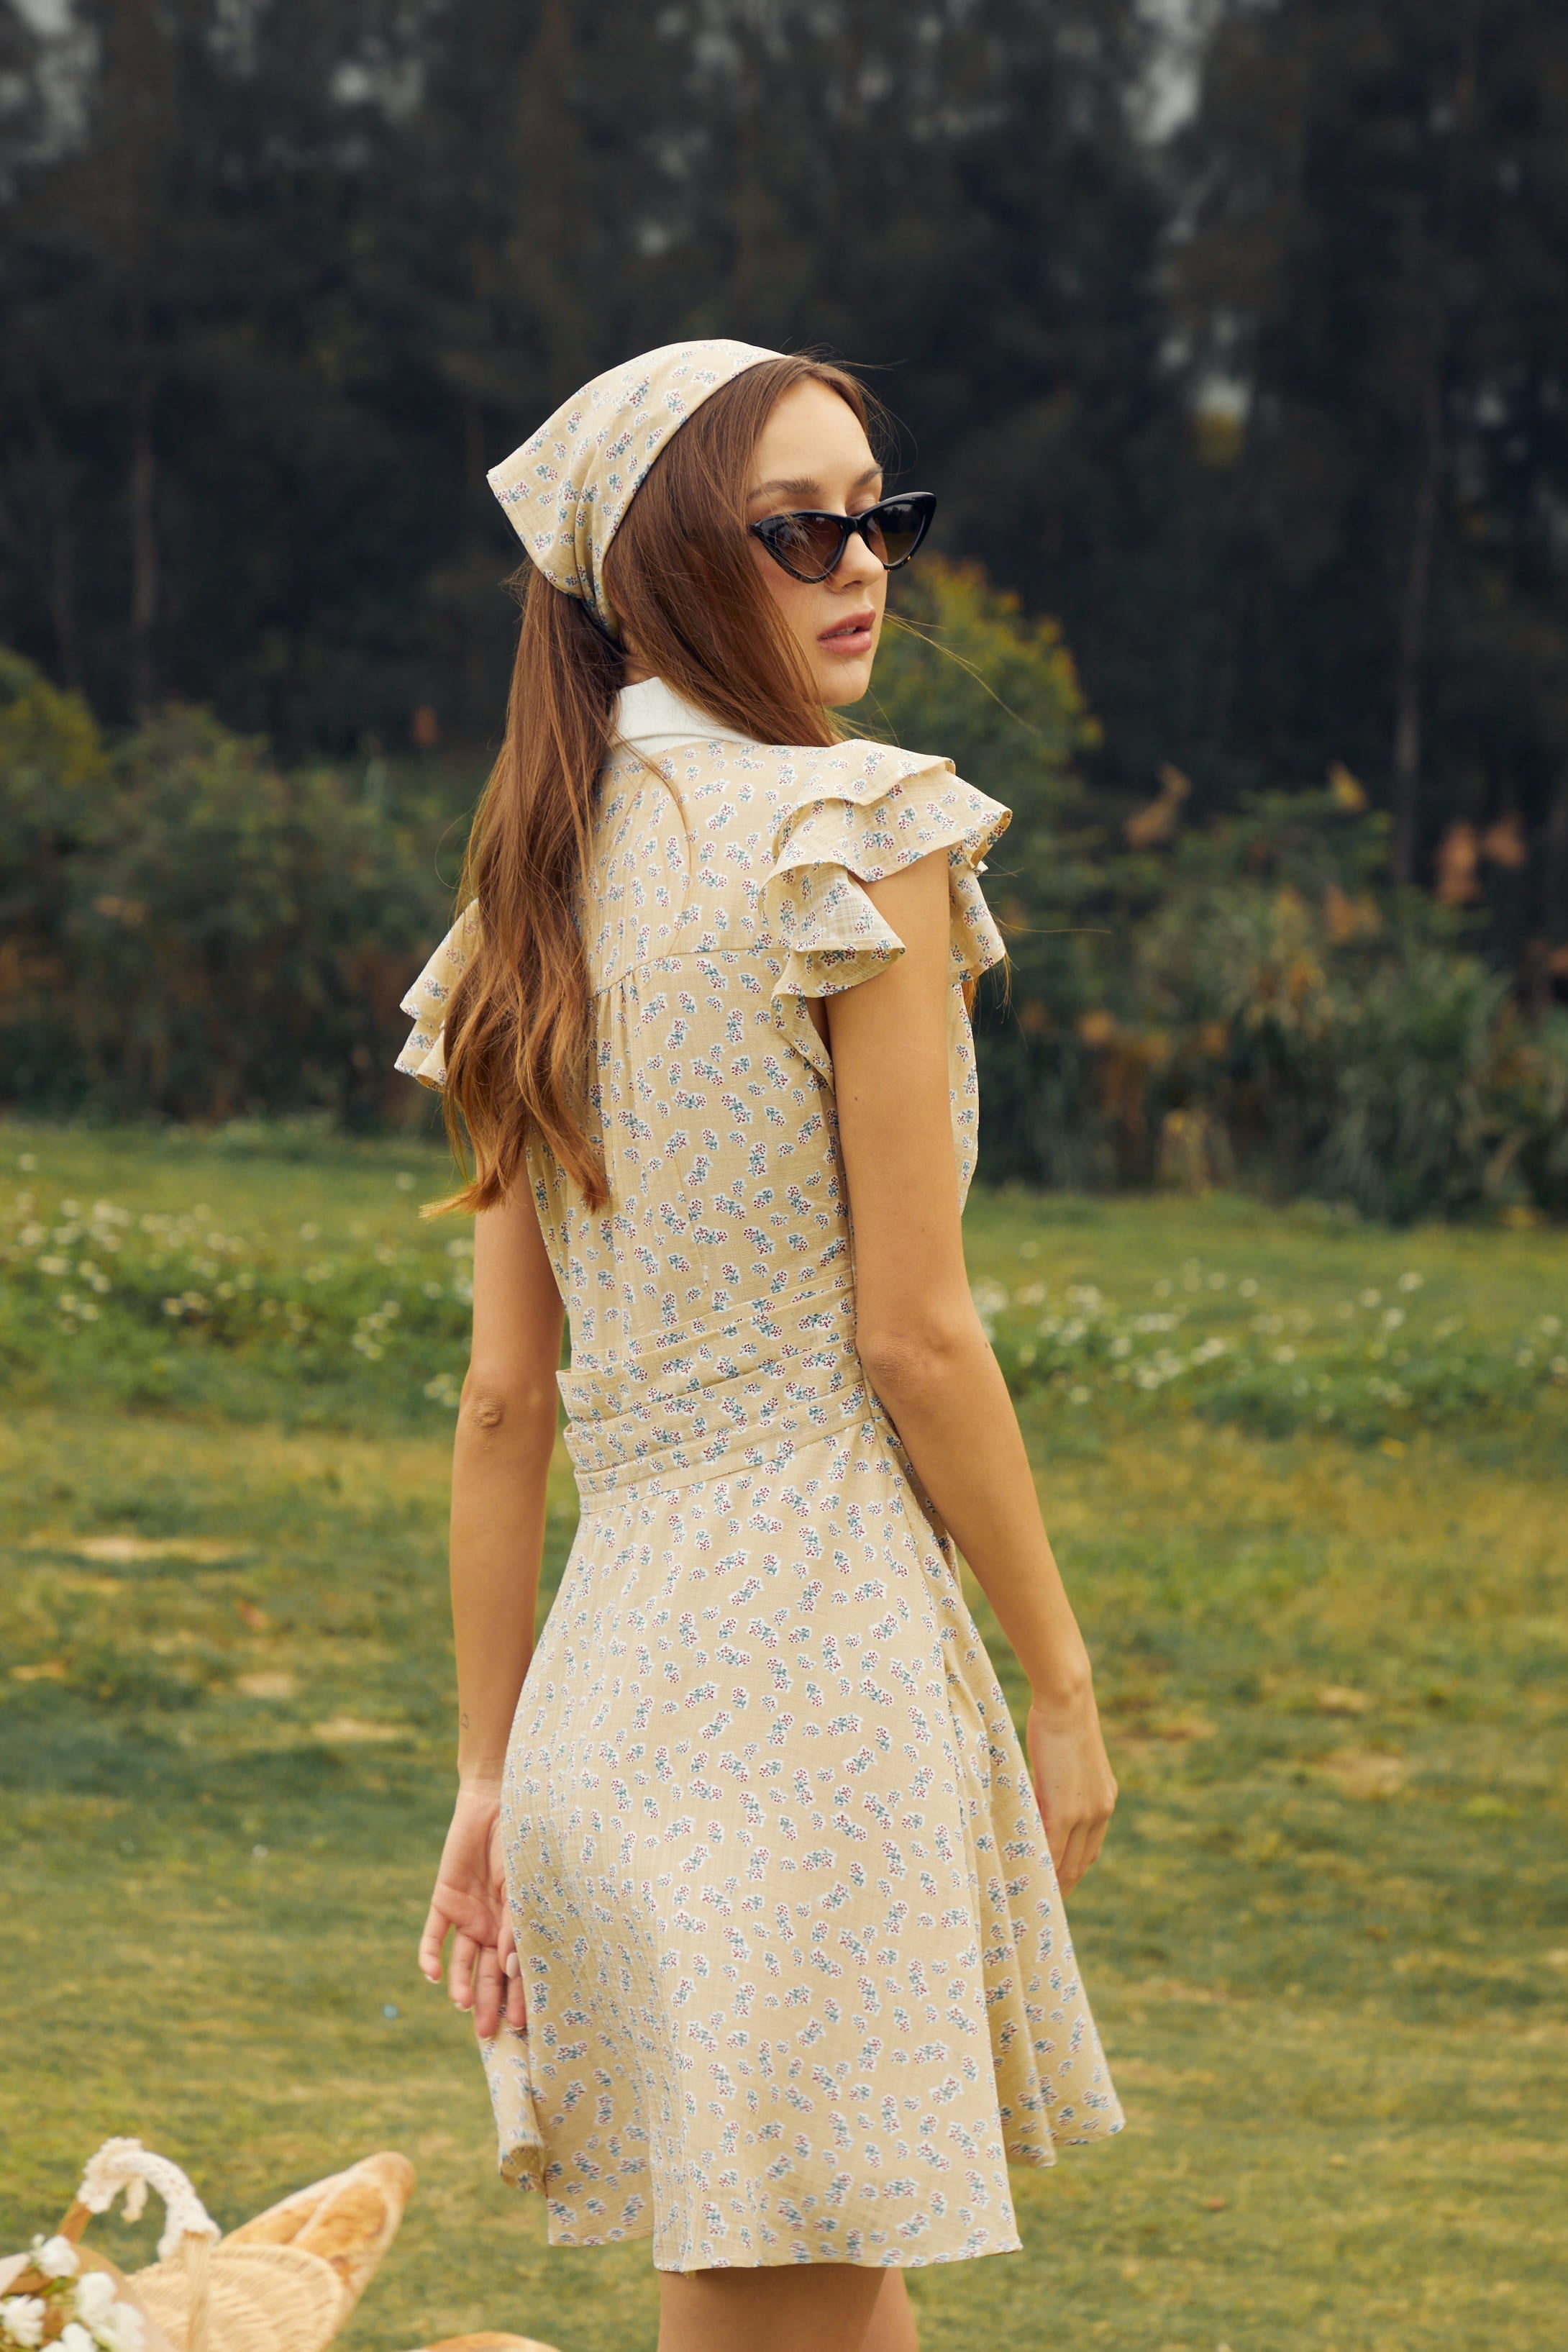 Double White Collar Short Sleeve Dress - By Quaint